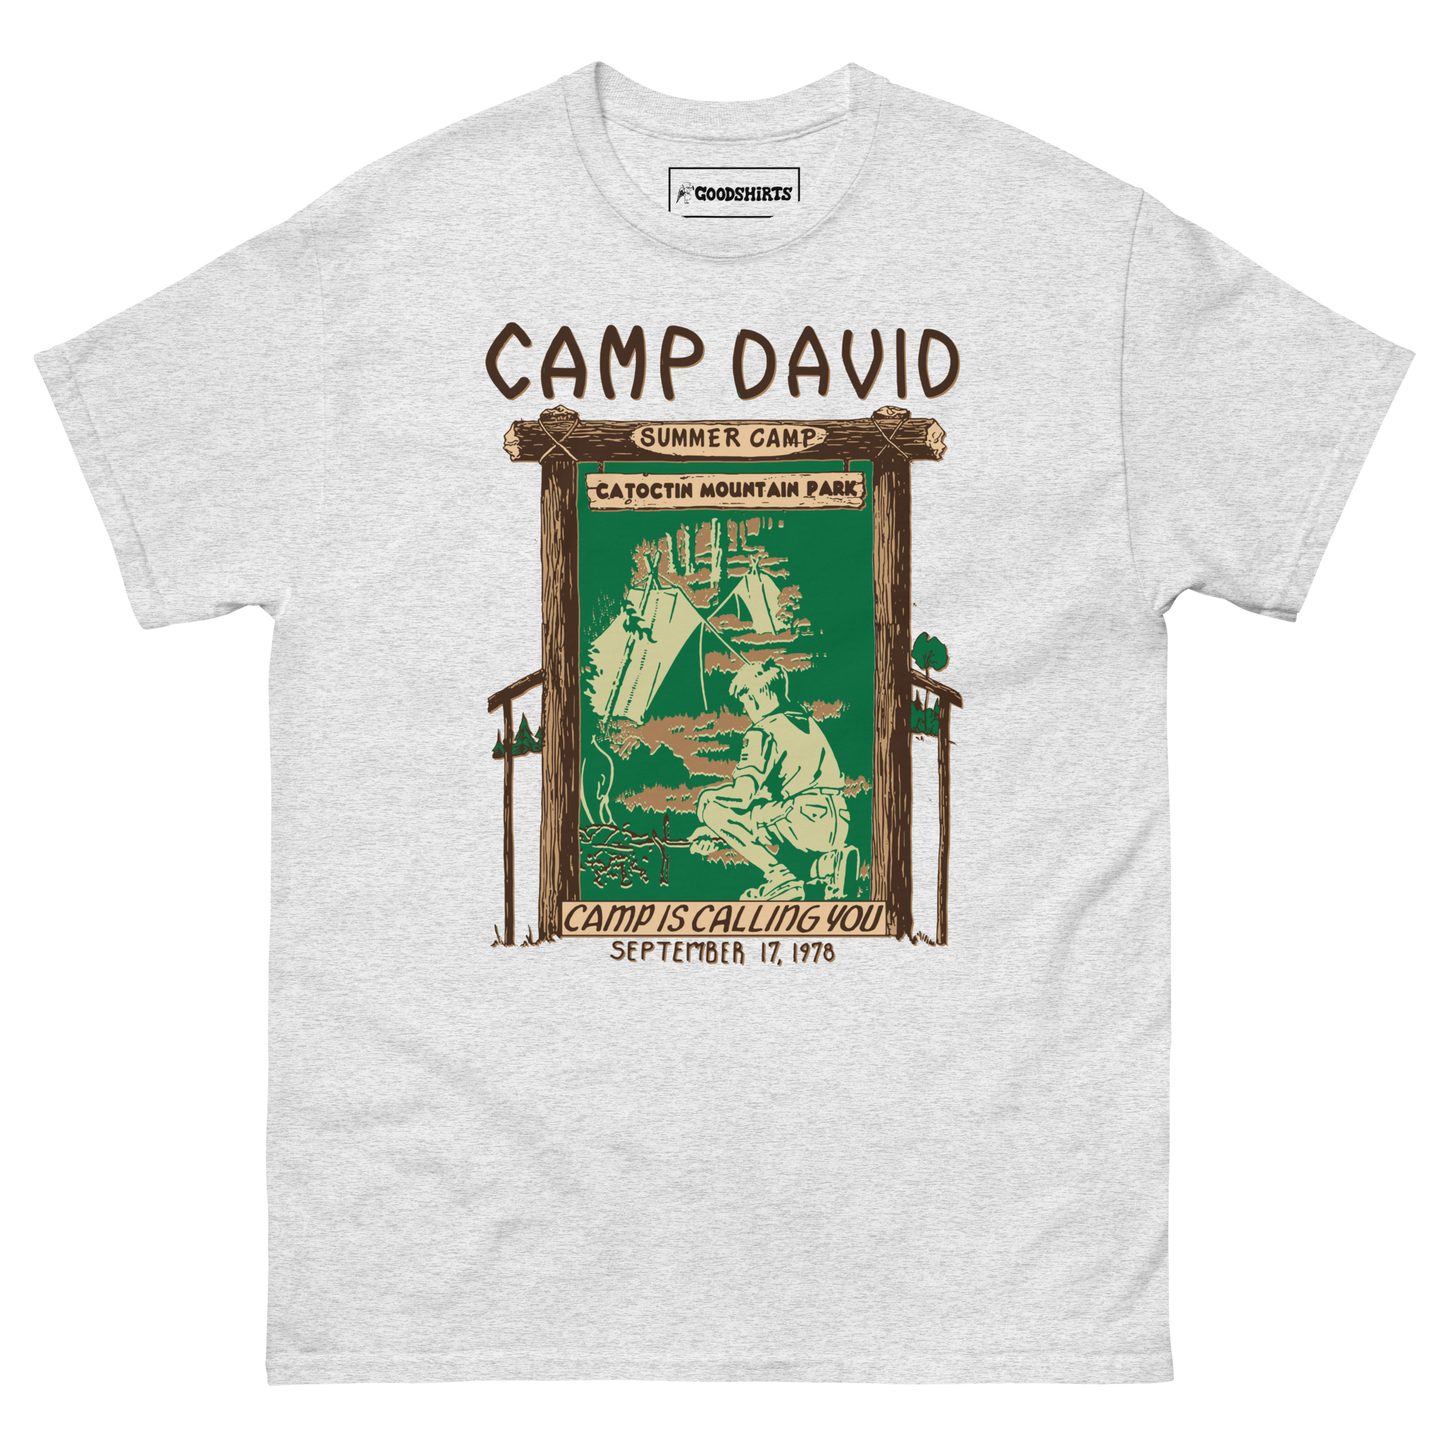 Camp David Summer Camp.